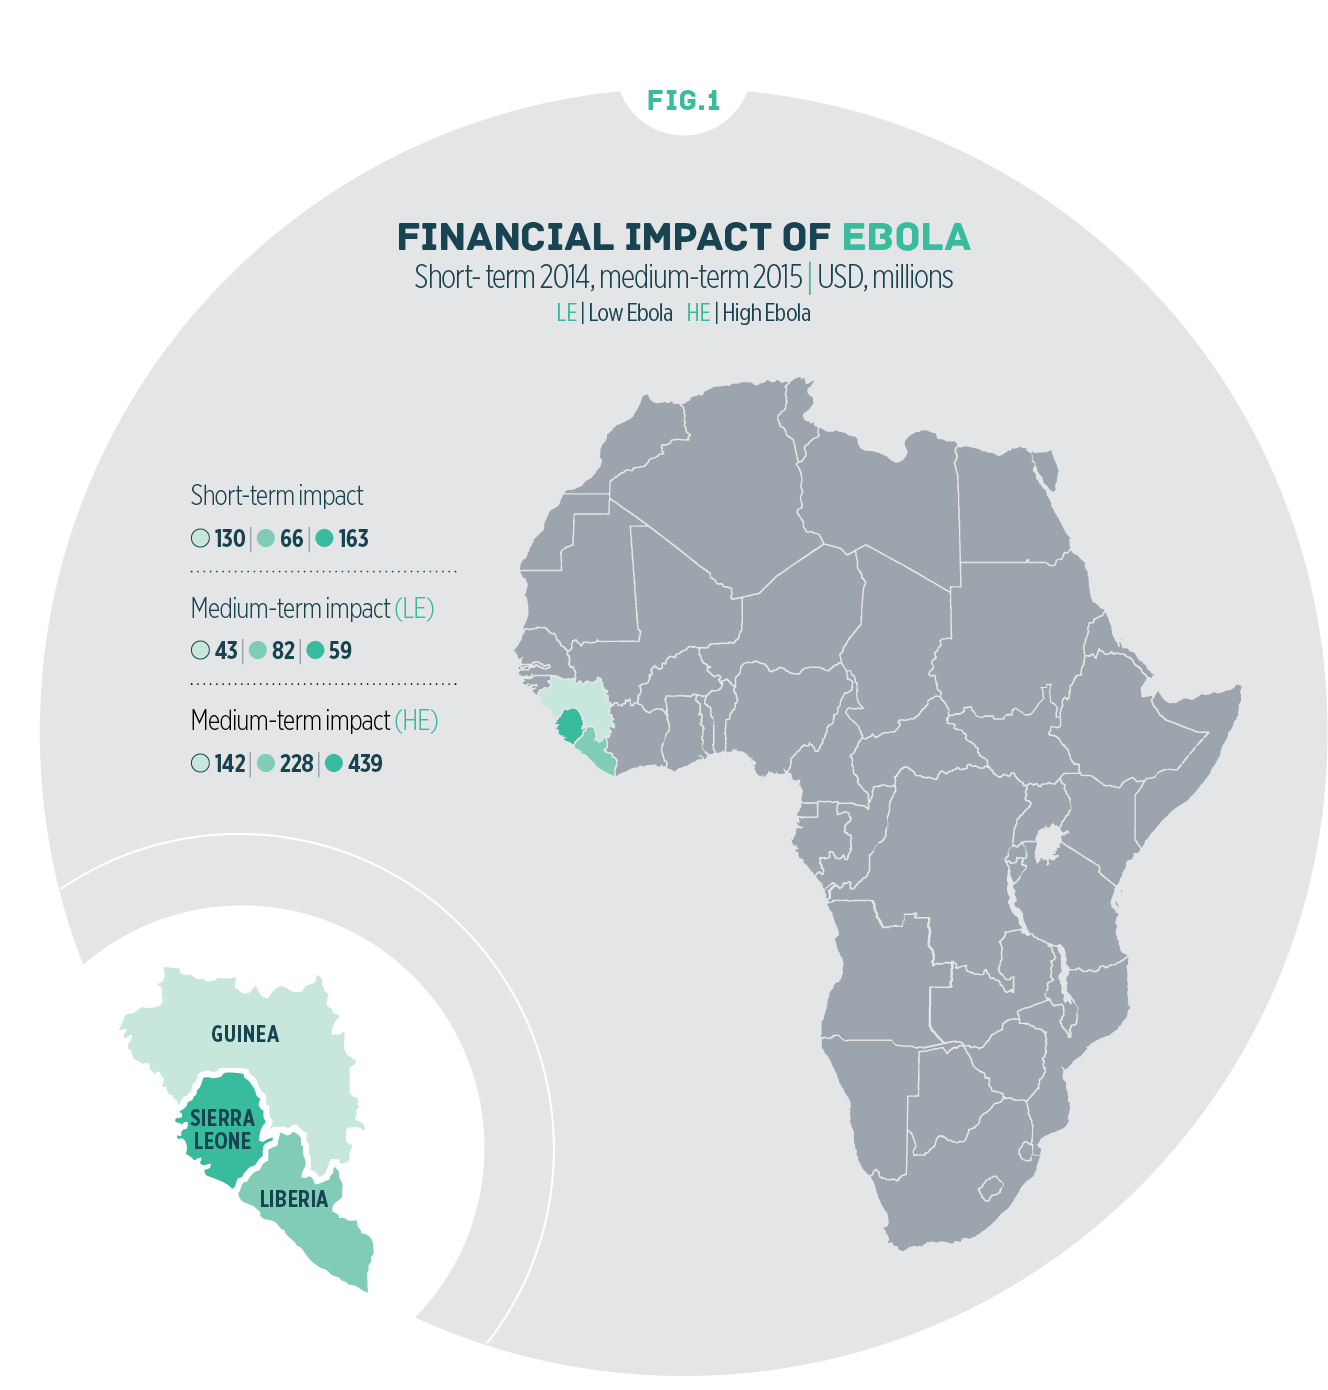 Financial impact of Ebola